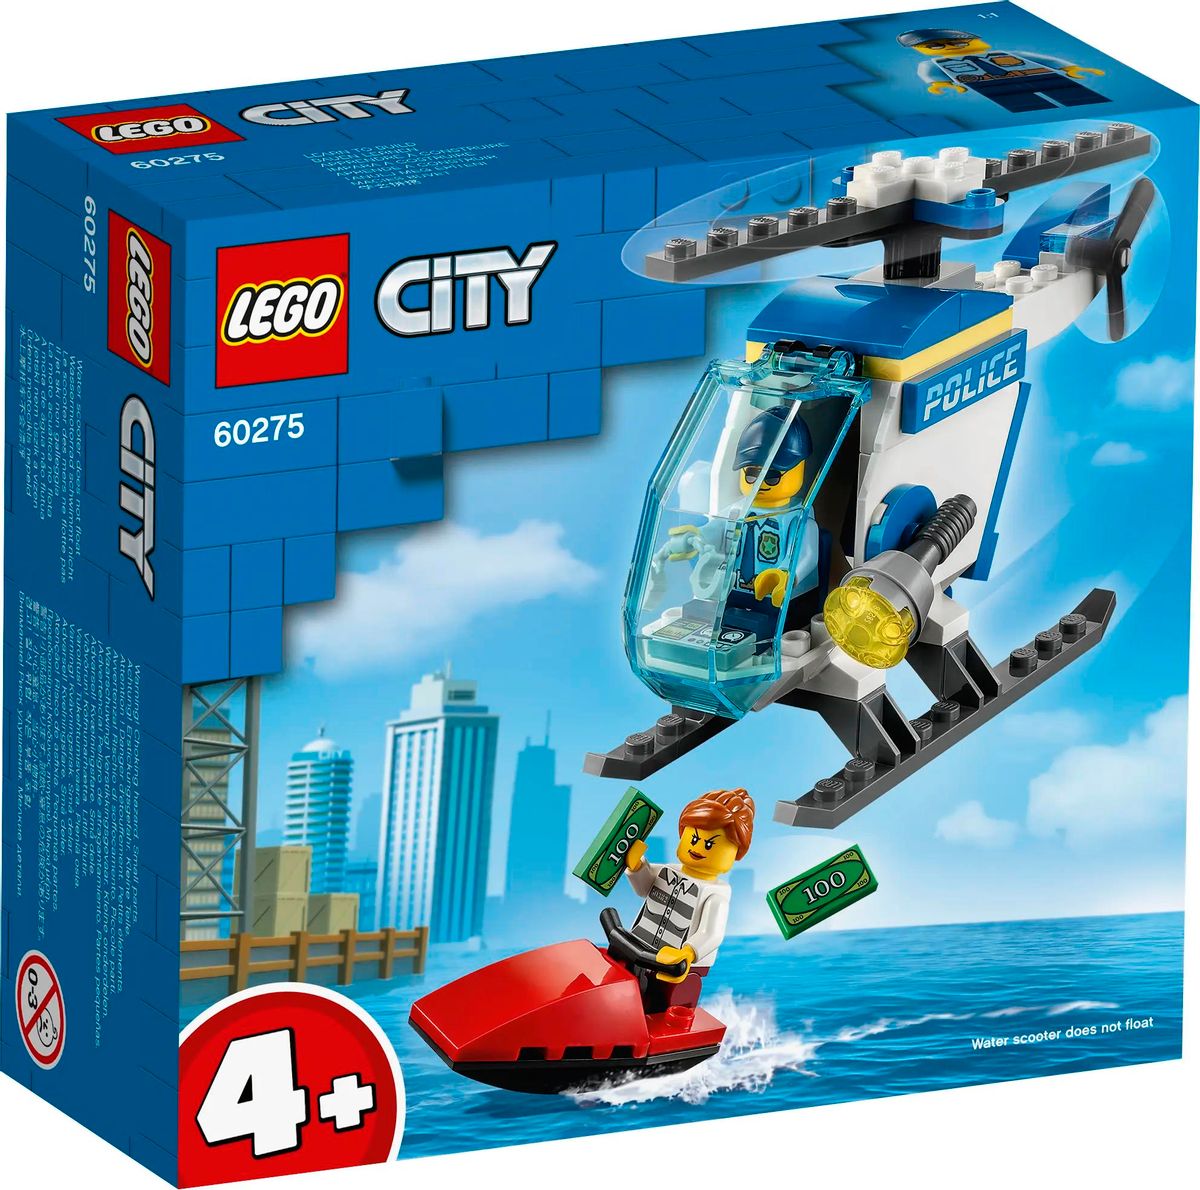    Lego City Police   60275  1460690  - 